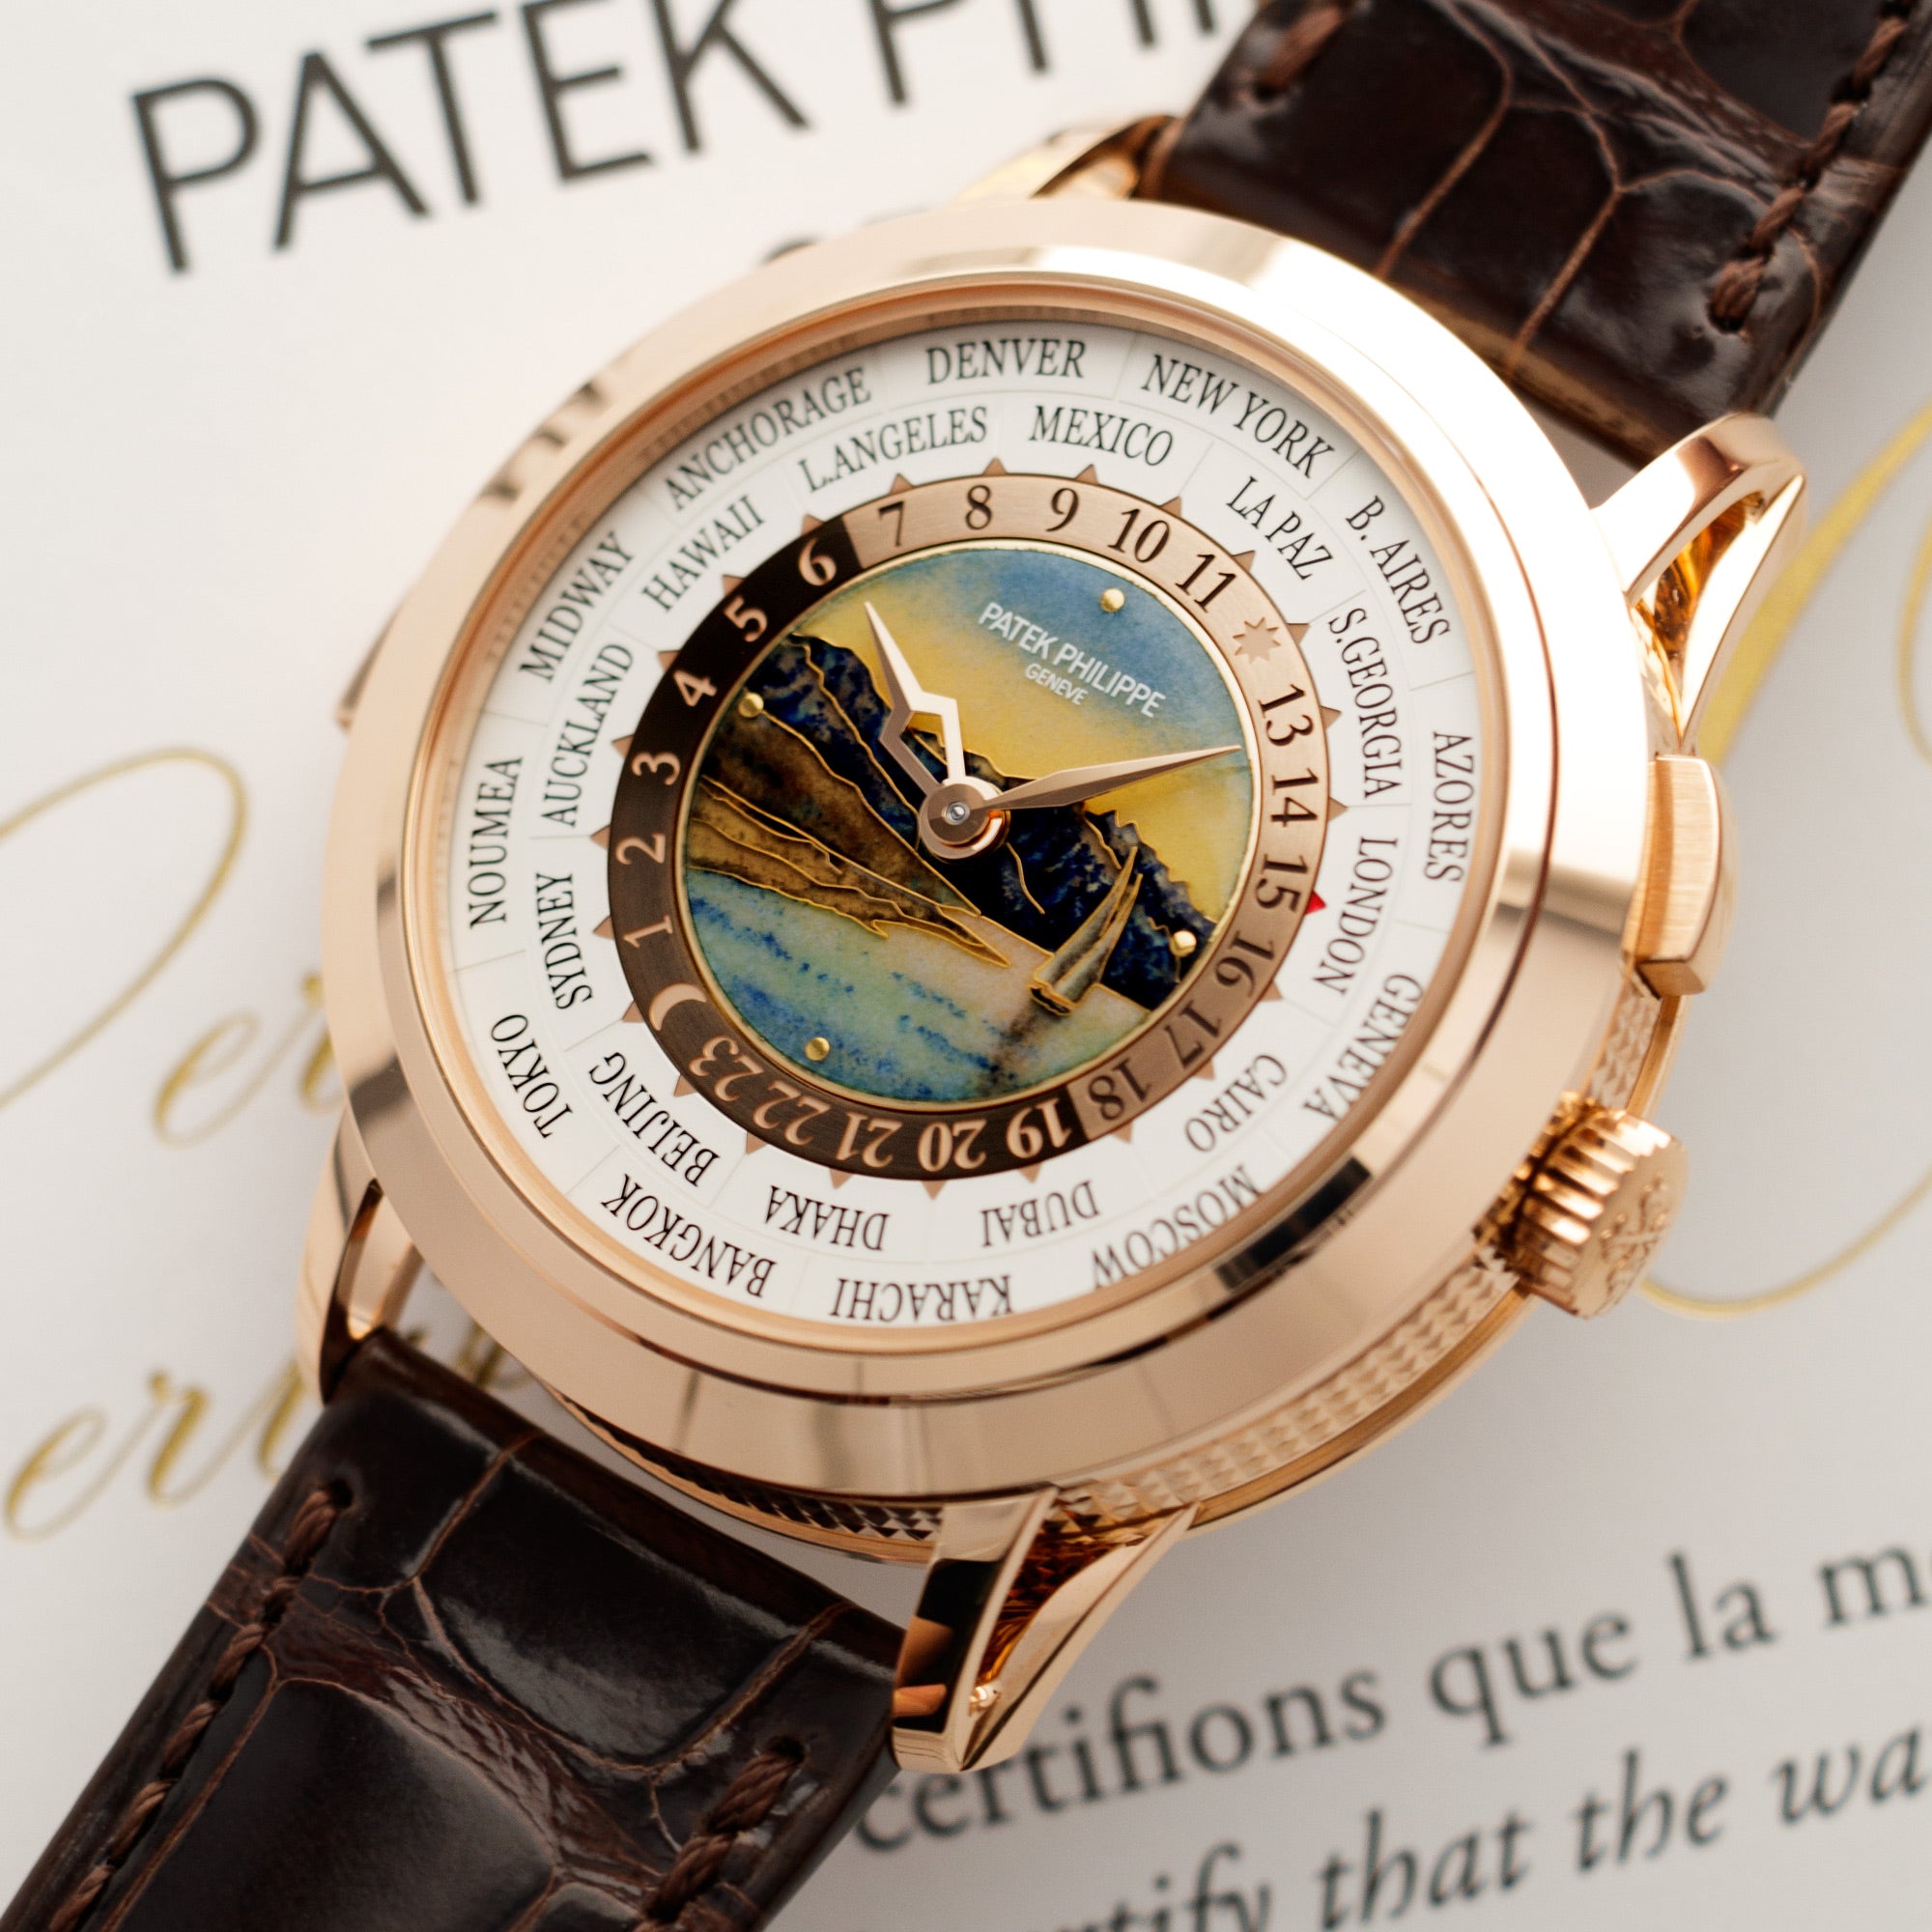 Patek Philippe - Patek Philippe Rose Gold Minute Repeater Watch Ref. 5531 - The Keystone Watches